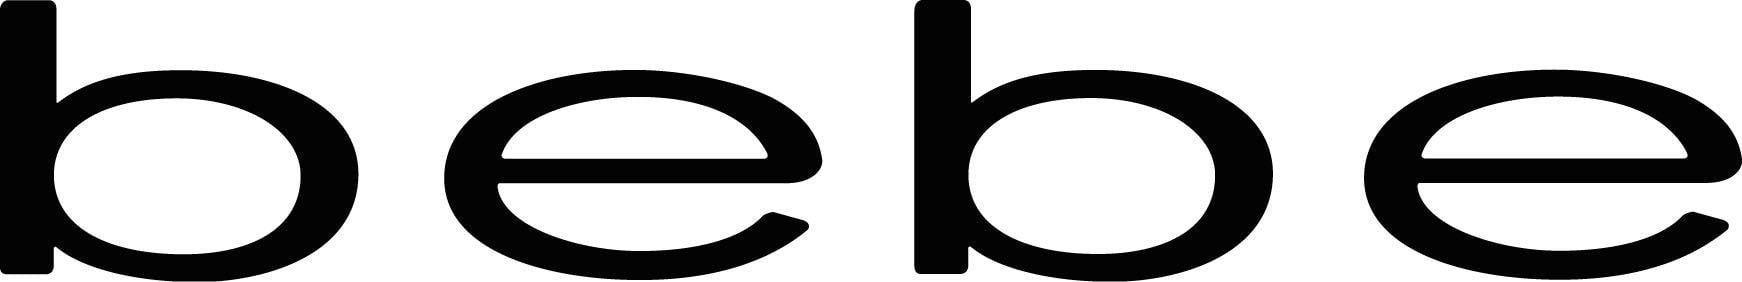 Bebe Clothing Logo - Bebe Logos